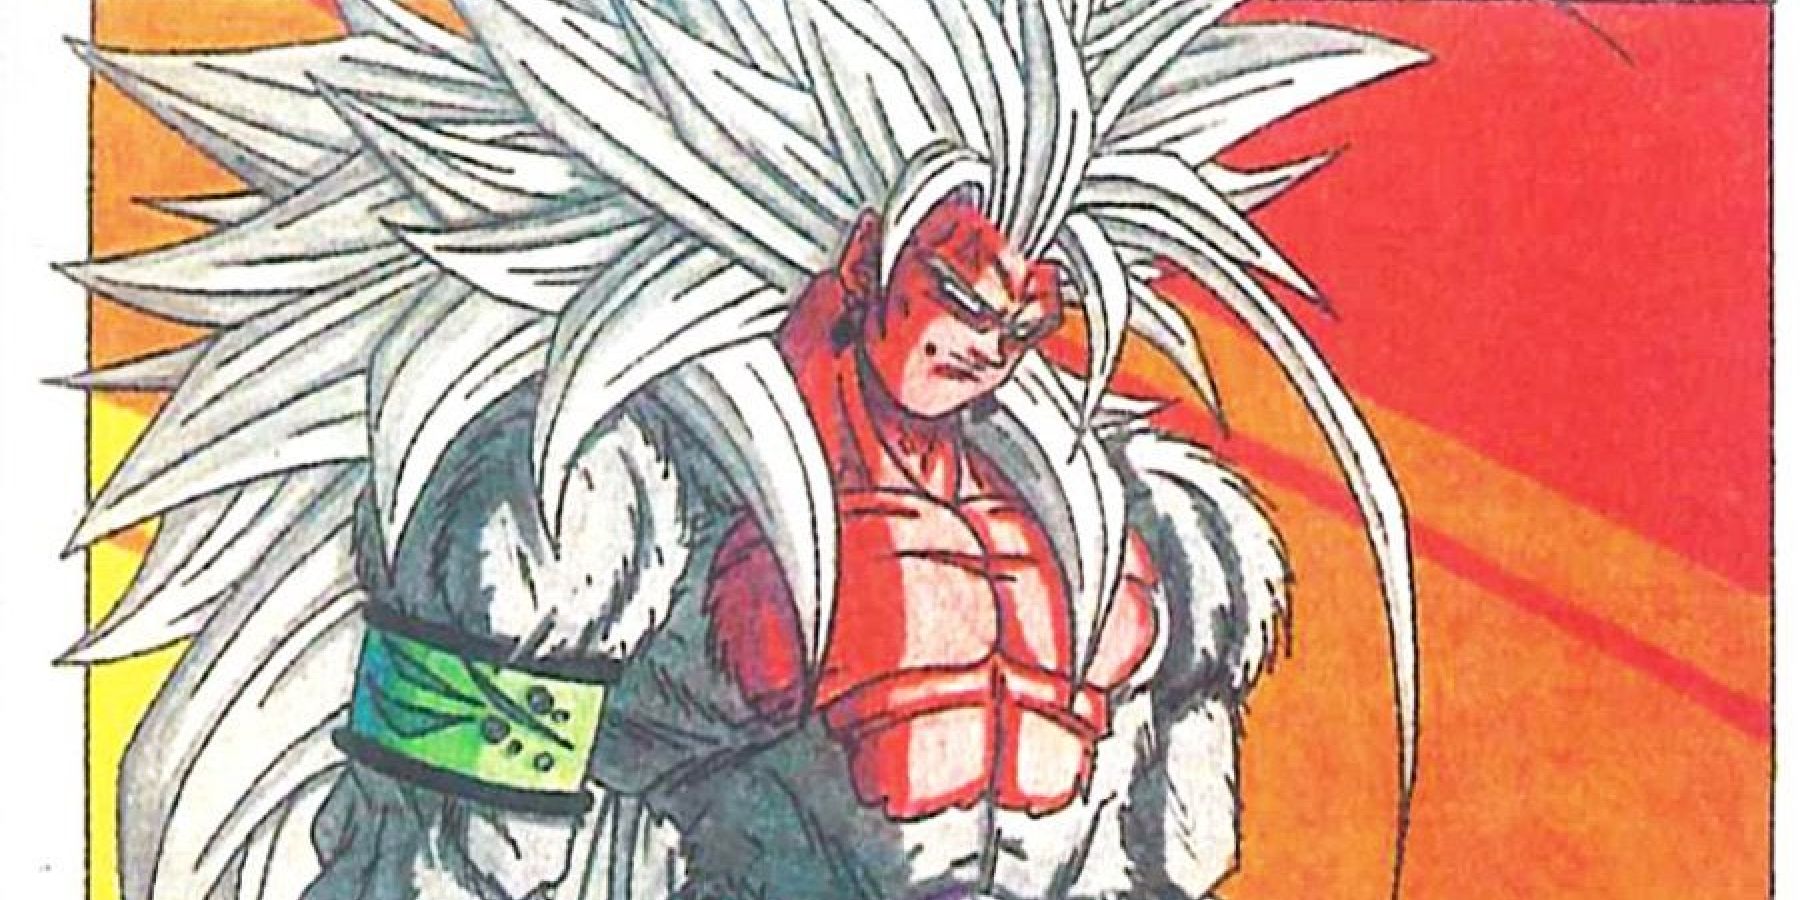 Debunking “Vegeta VS AF Goku Power Levels Over The Years